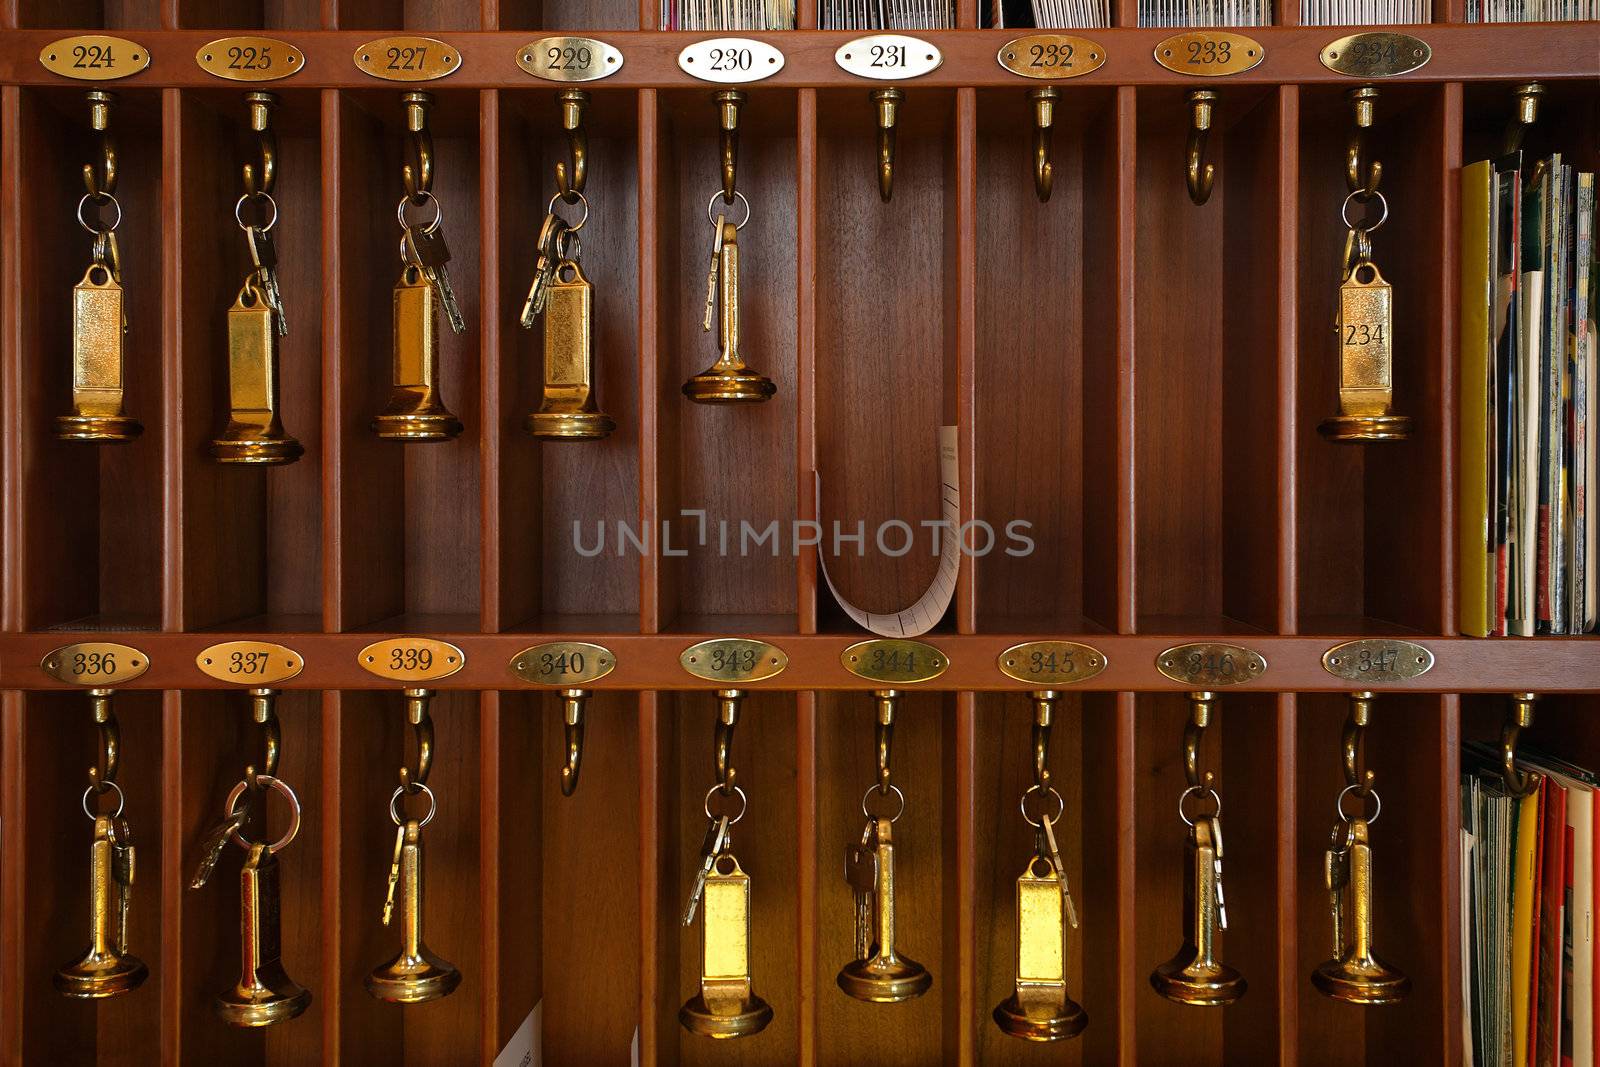 Vintage hotel front desk key rack. Focus on the top row of keys.
